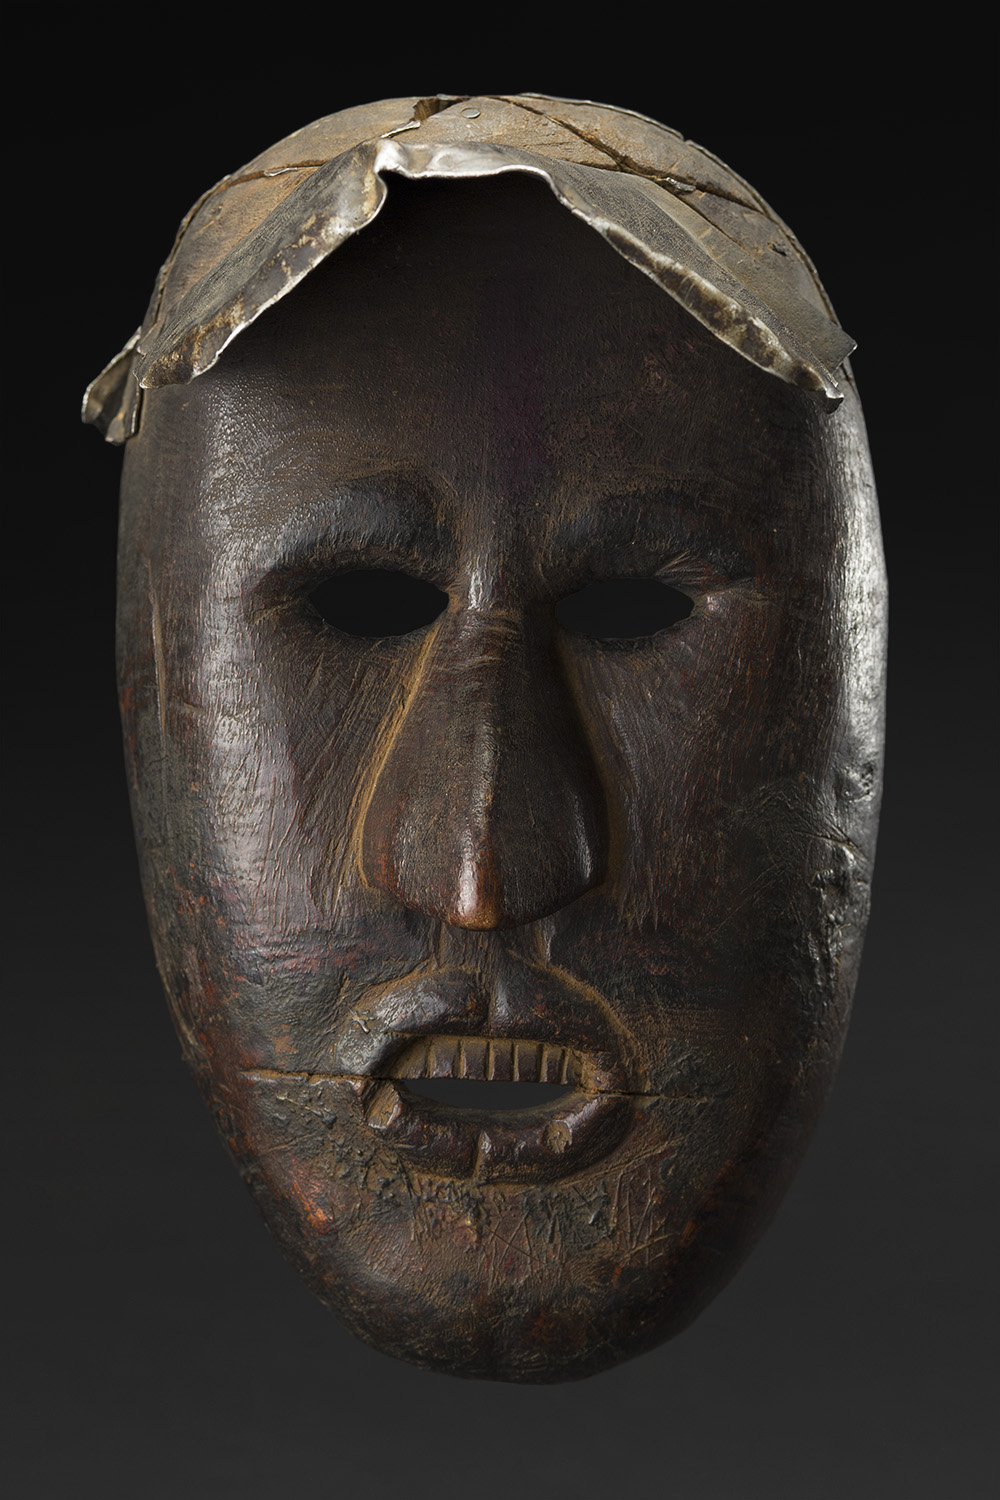   Masks    Nepal  , Early 20th C. Wood, metal 9 x 5.5 x 6.5 inches 22.9 x 14 x 16.5 cm M 223s 